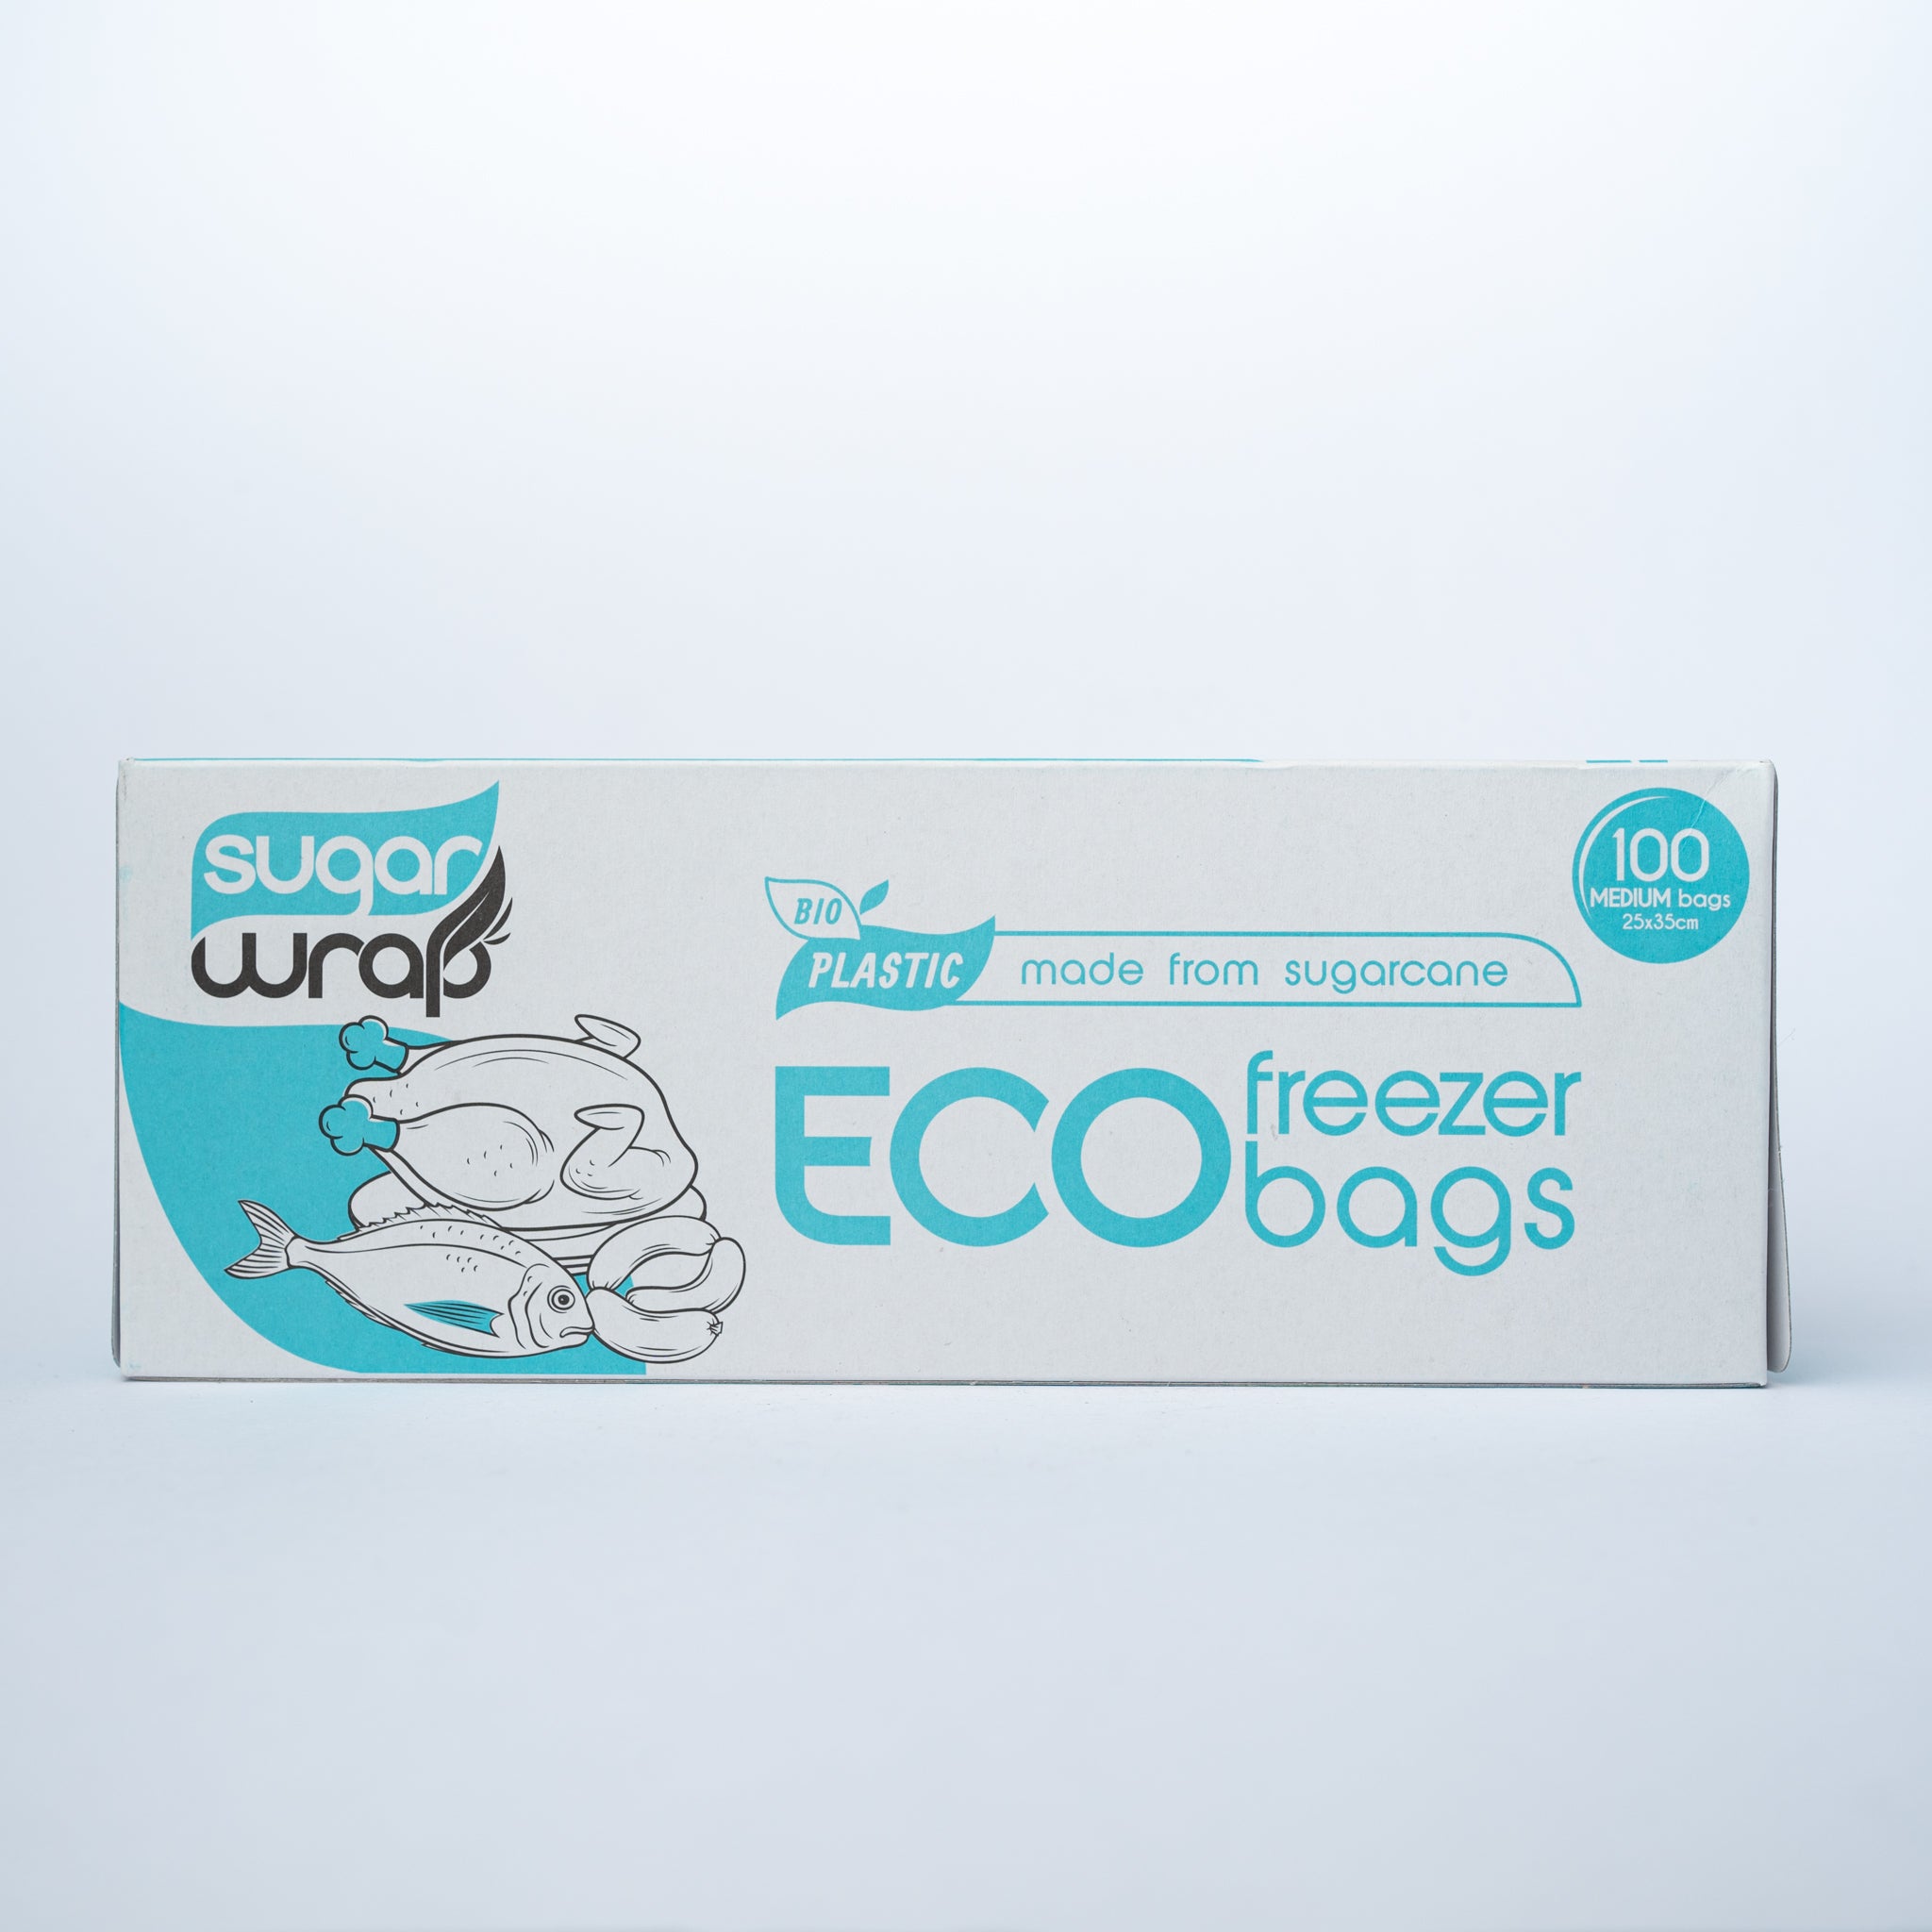 SugarWrap Eco Freezer Bags 100 Medium Bags